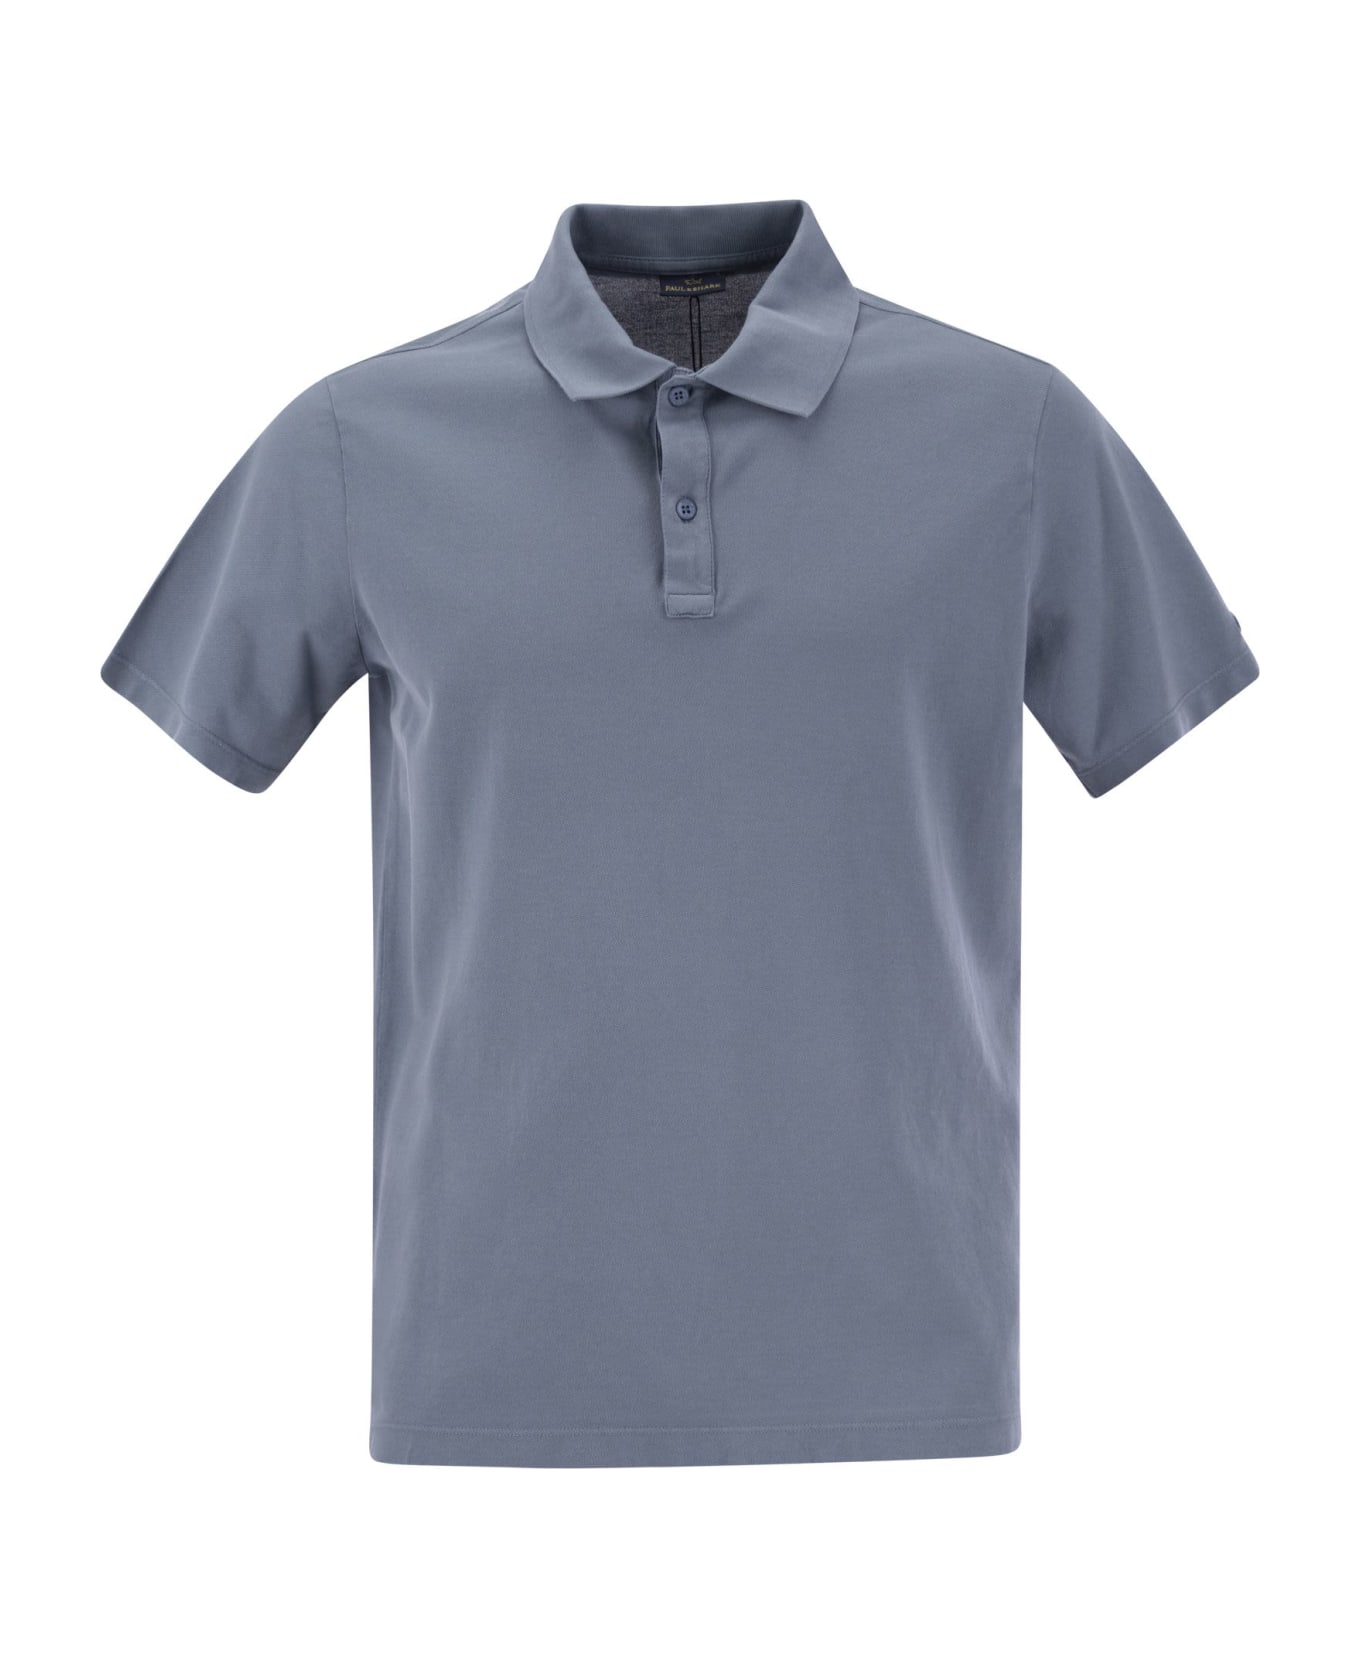 Paul&Shark Garment-dyed Pique Cotton Polo Shirt - Sugar Paper